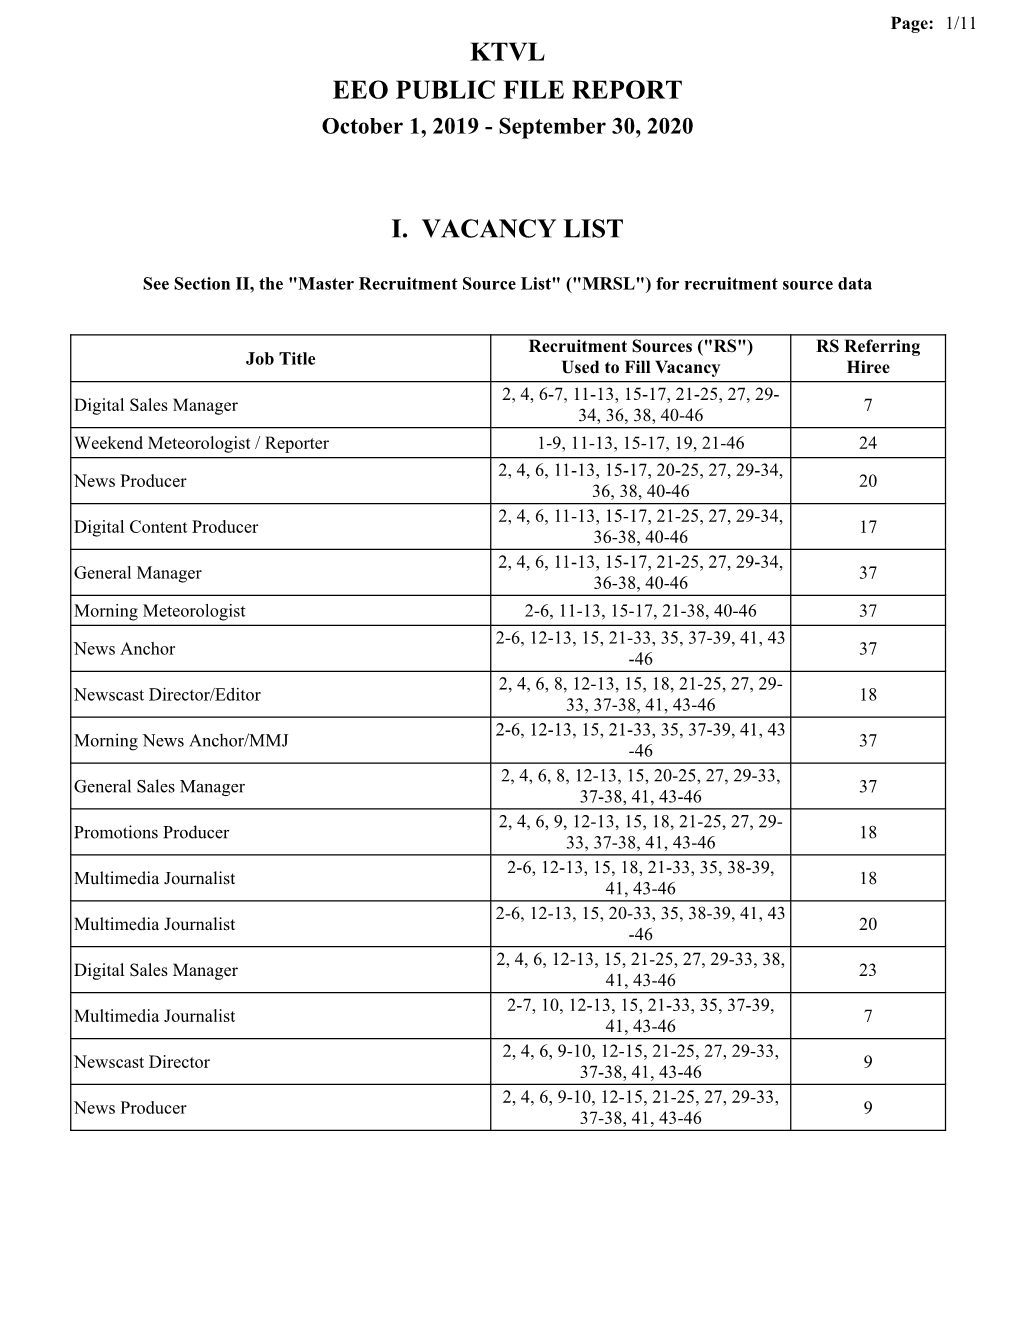 Ktvl Eeo Public File Report I. Vacancy List